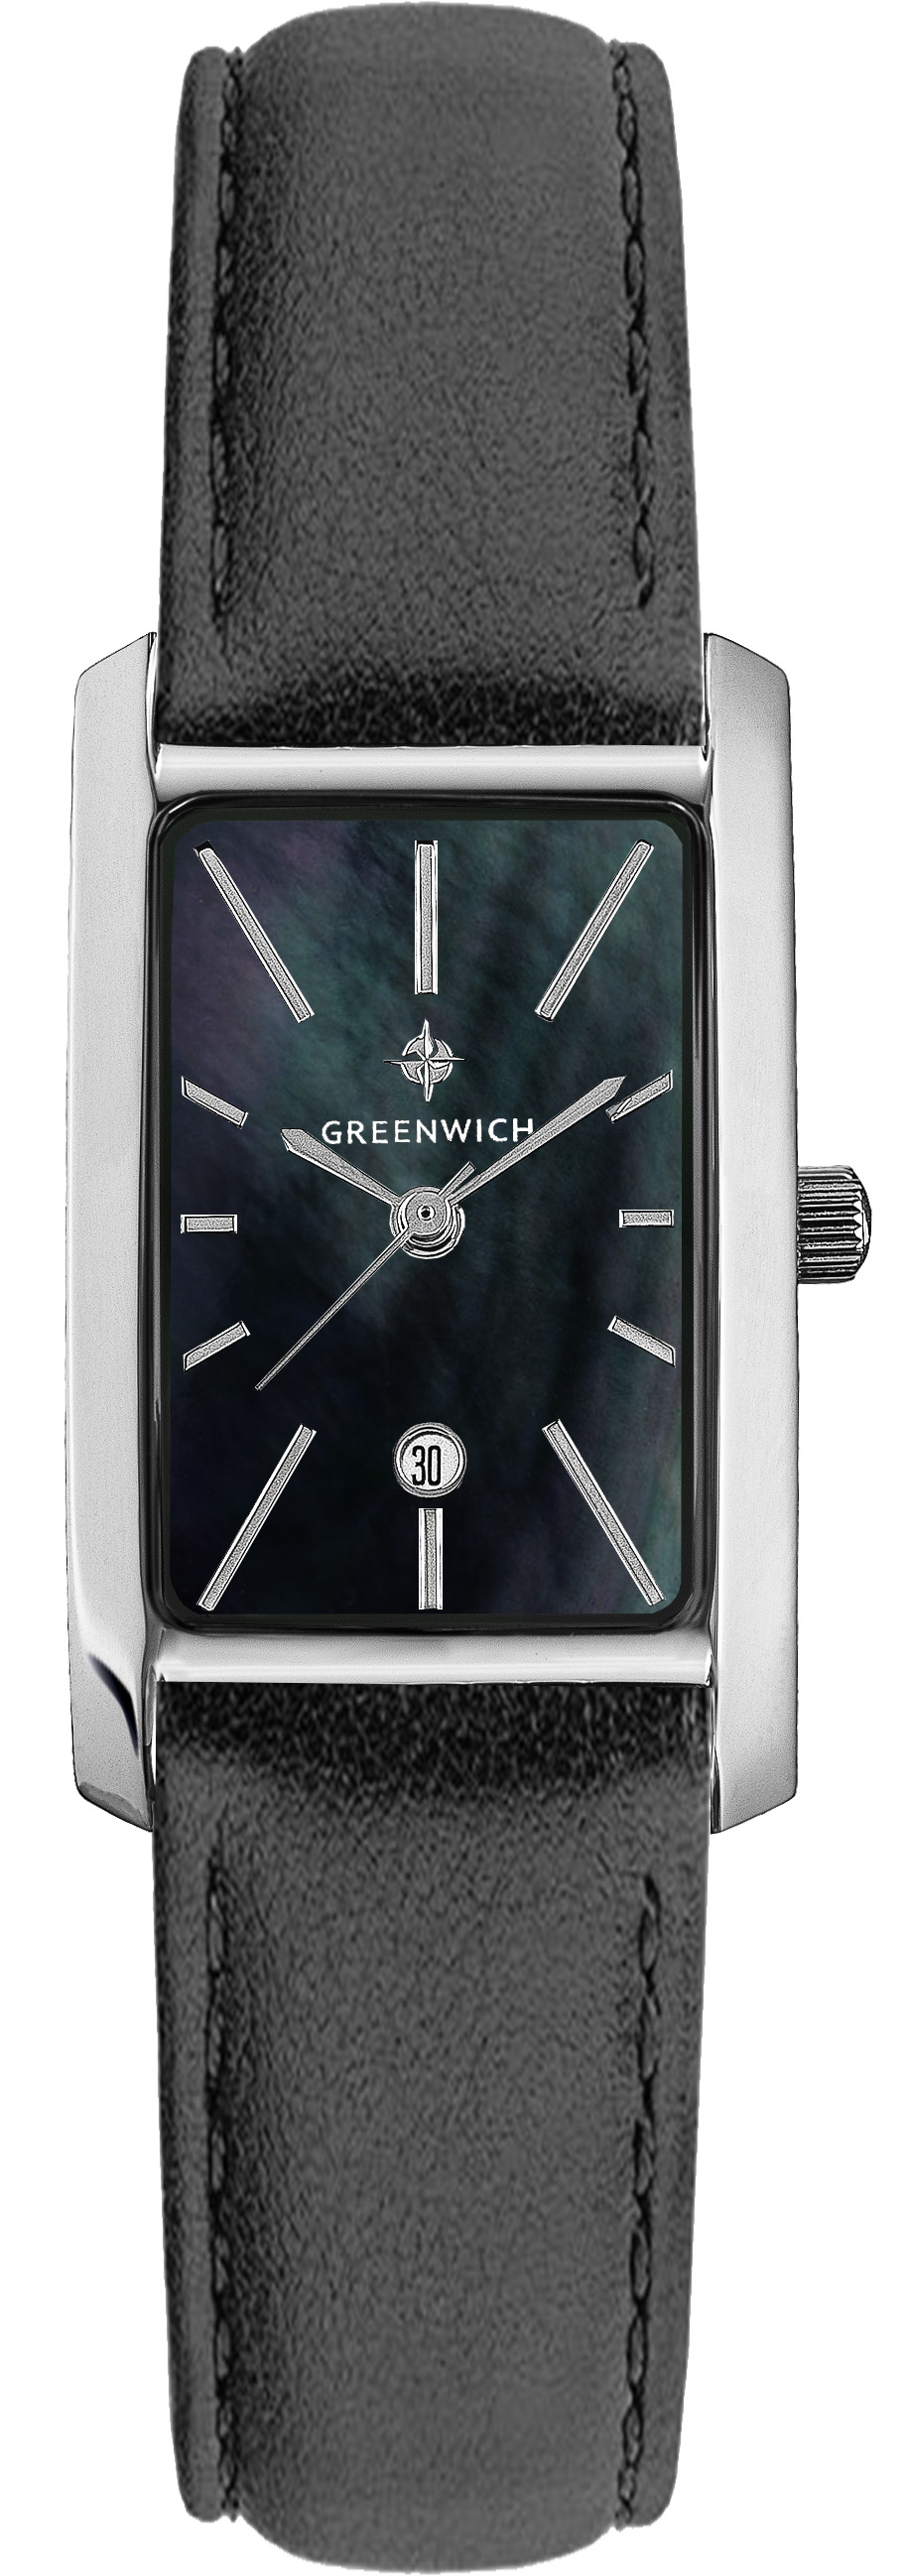 GW 511.11.11, женские часы Greenwich Vesta